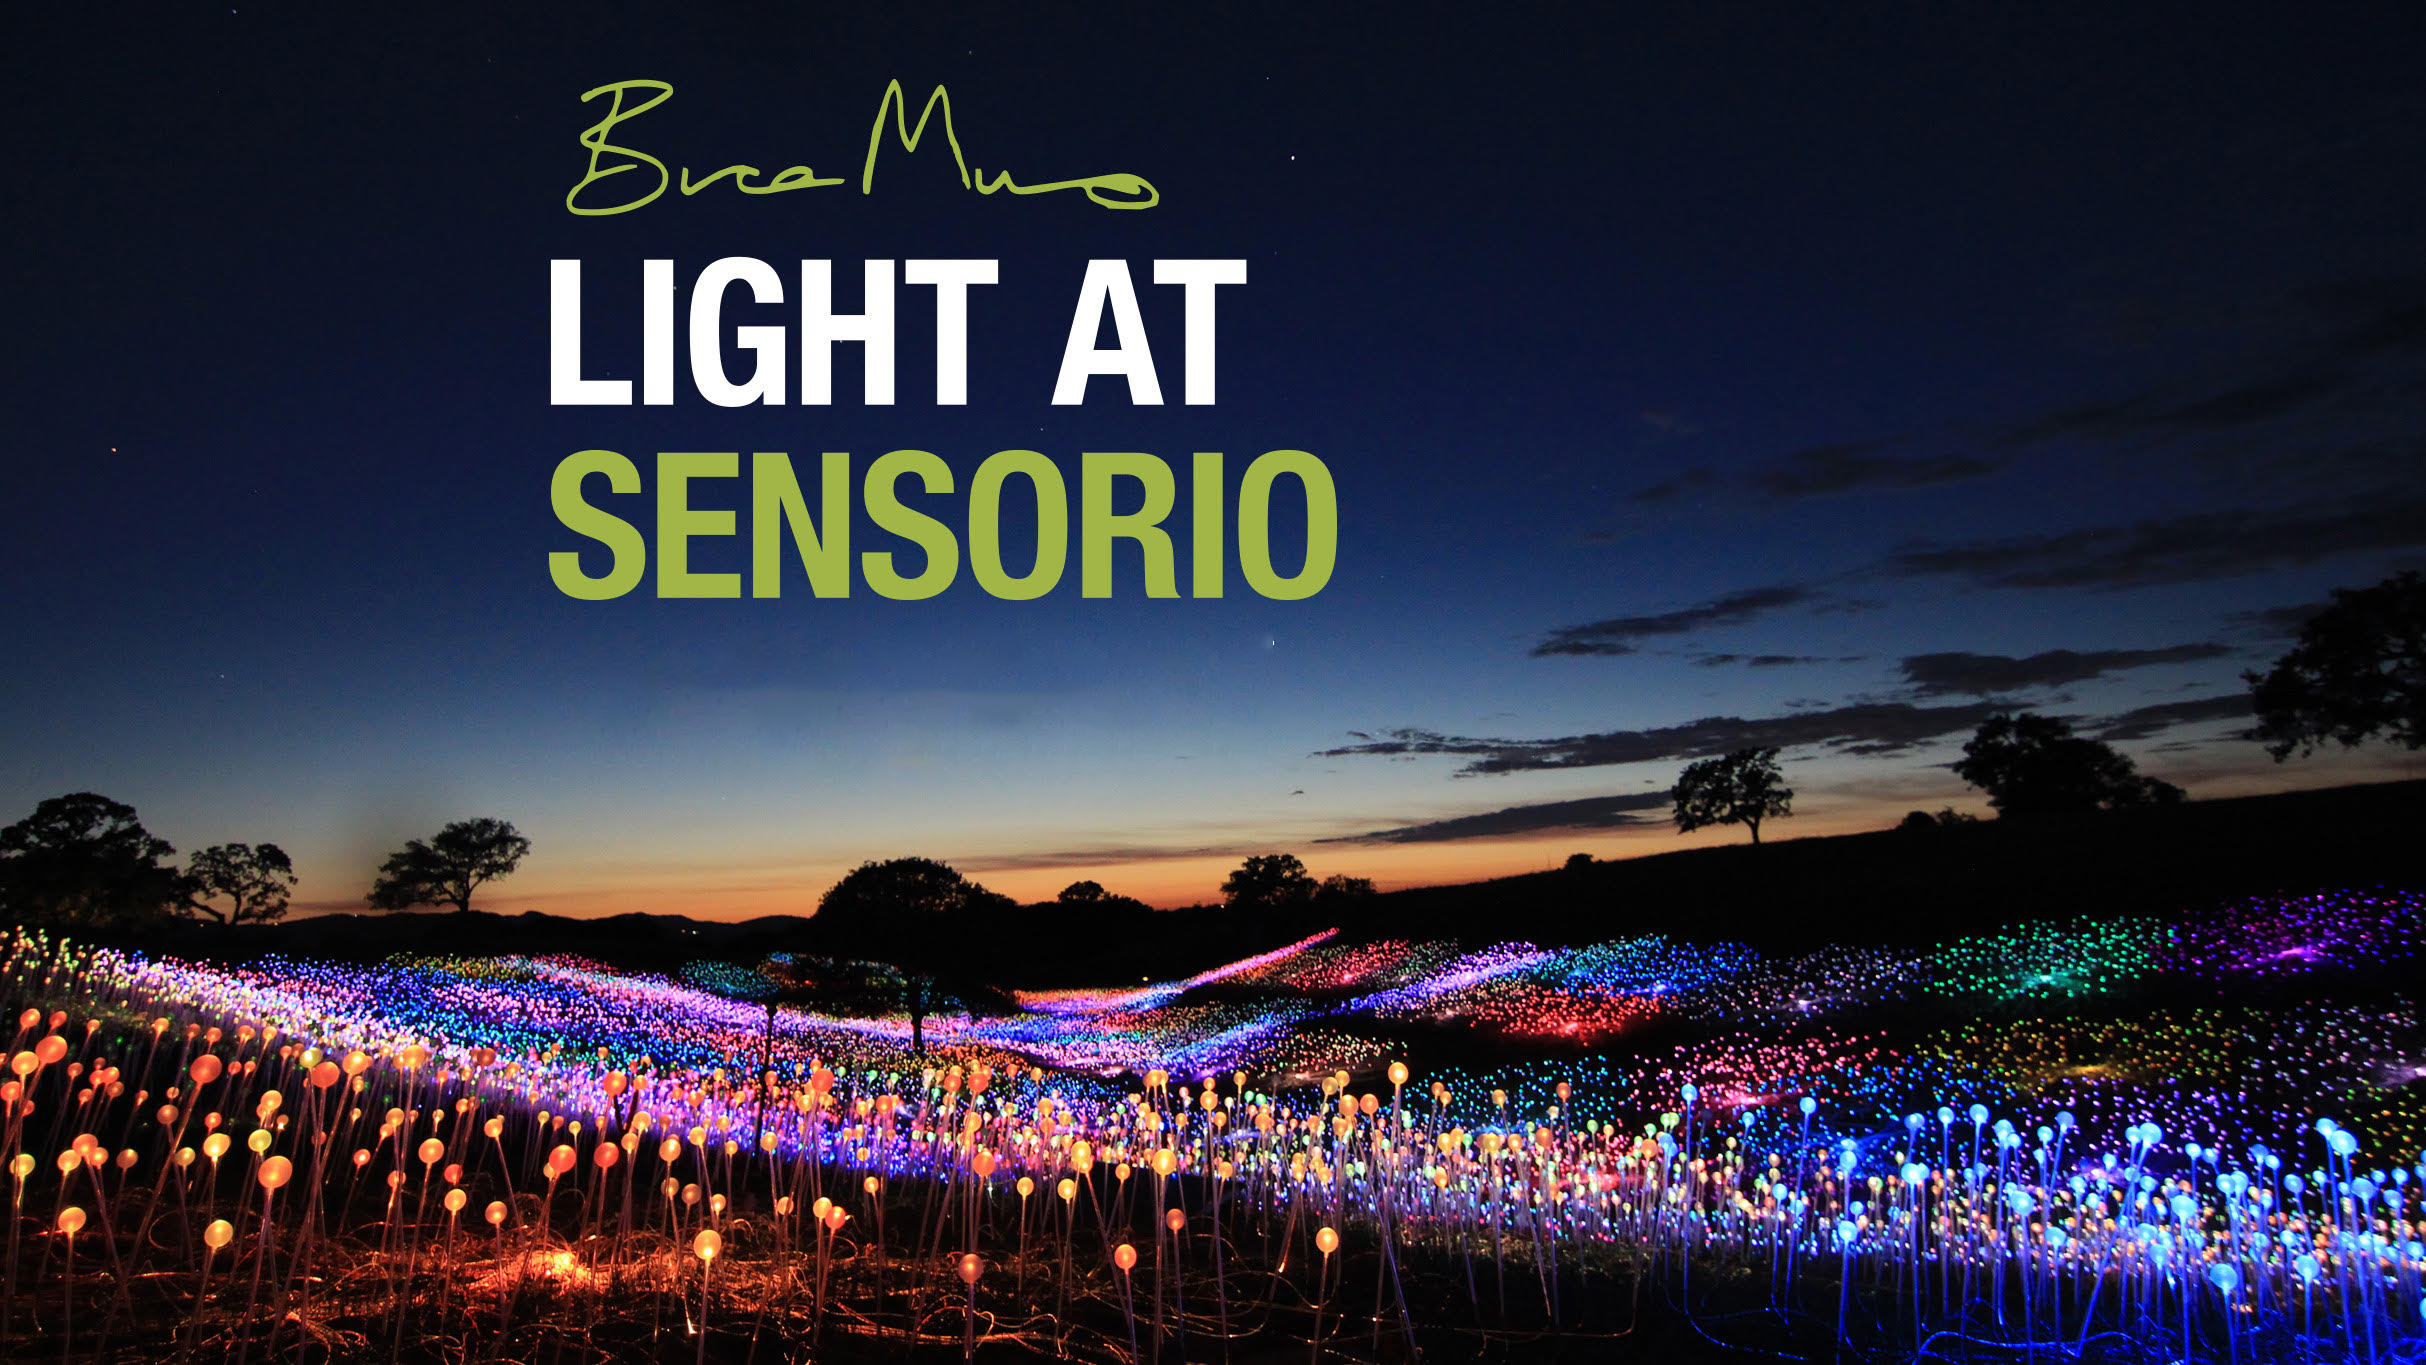 Bruce Munro: Light at Sensorio